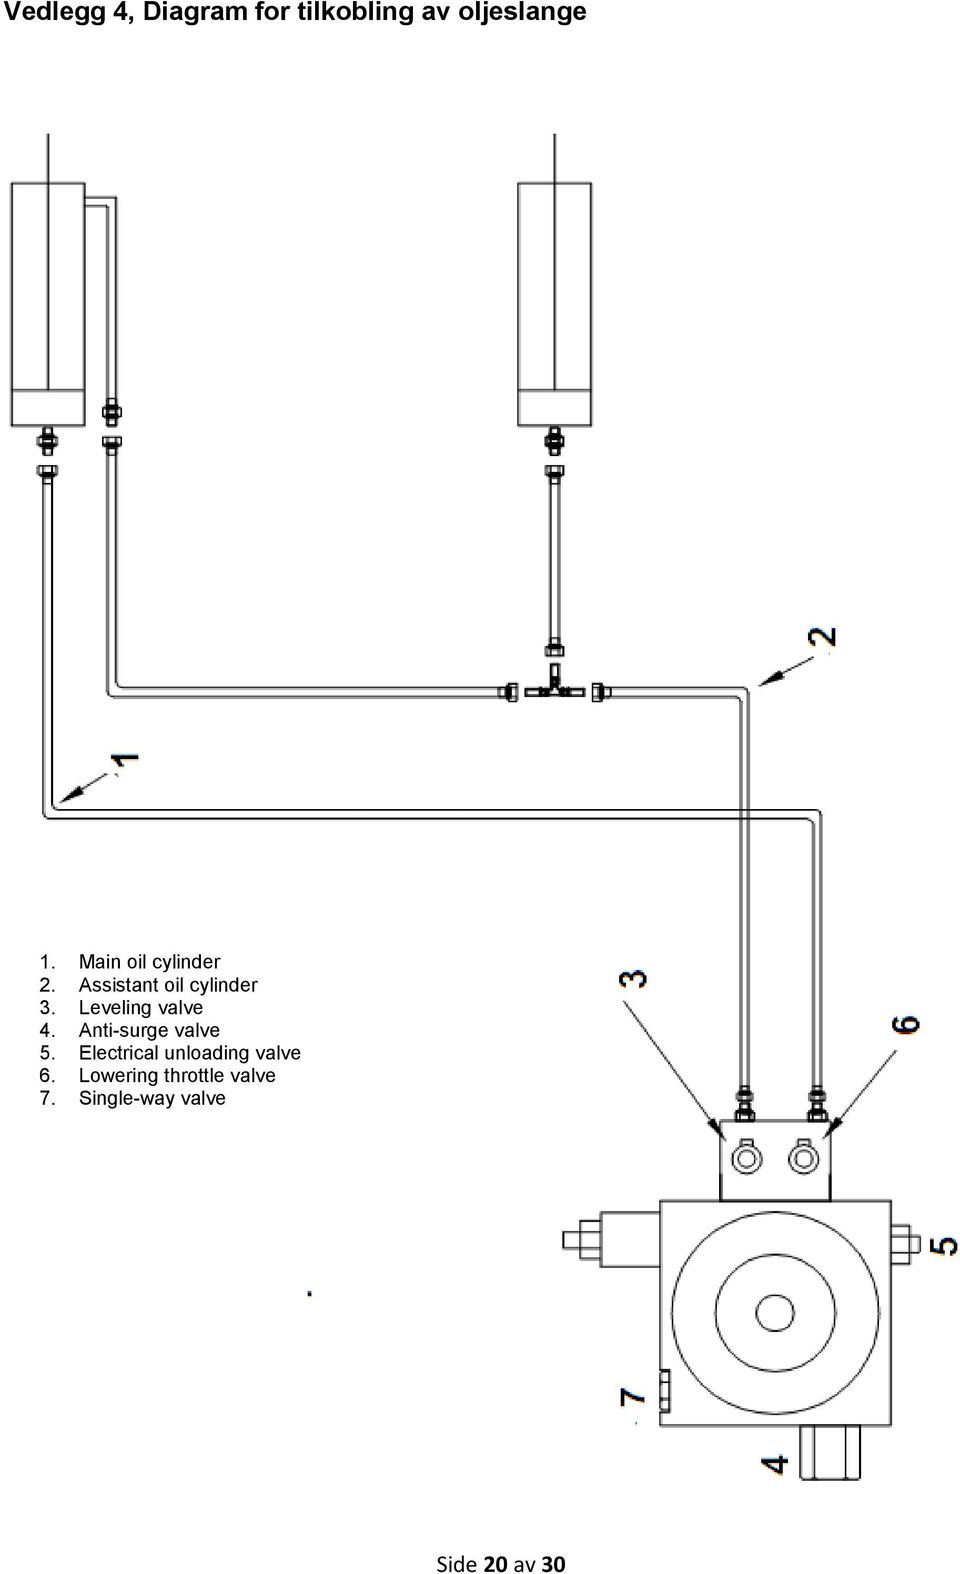 Leveling valve 4. Anti-surge valve 5.